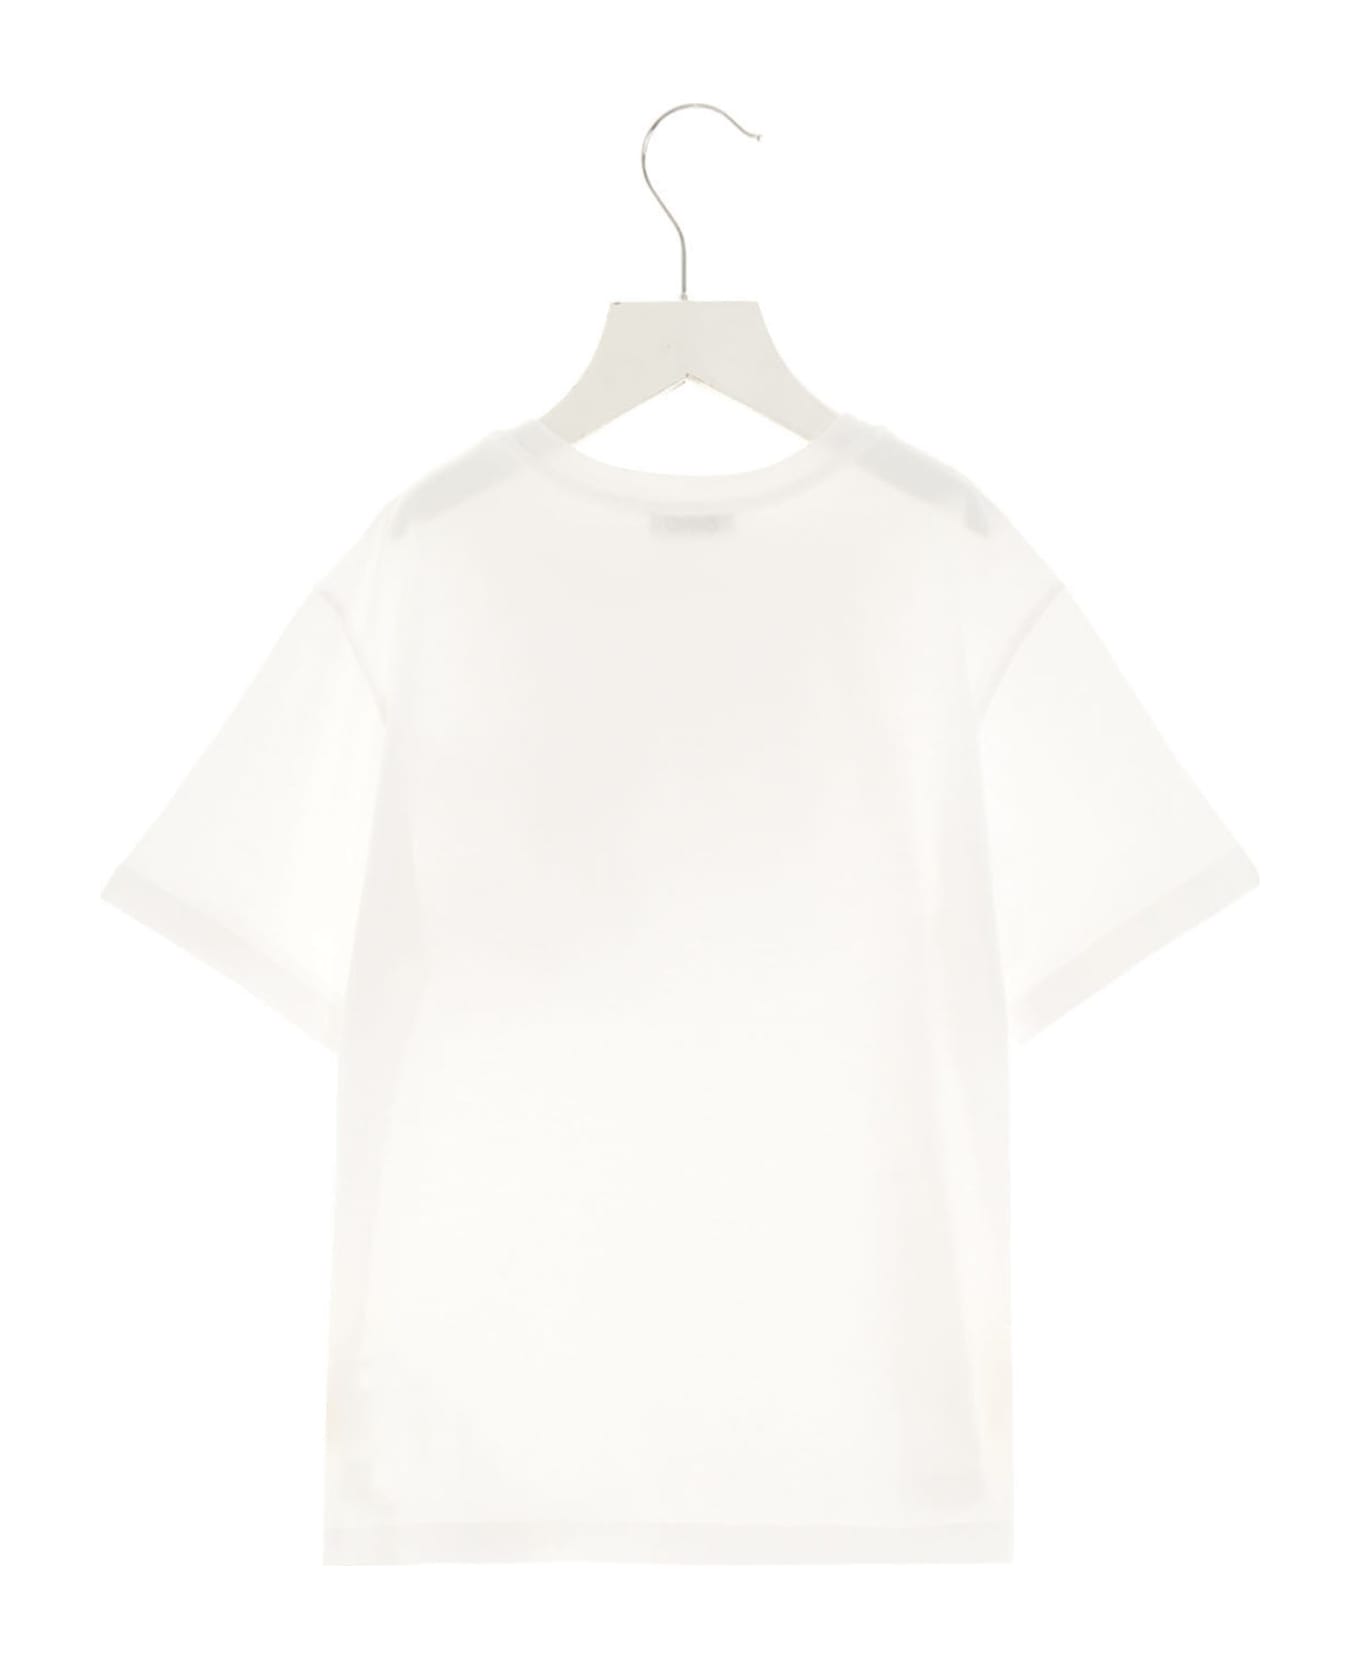 Dolce & Gabbana Logo Pocket T-shirt - White/Black